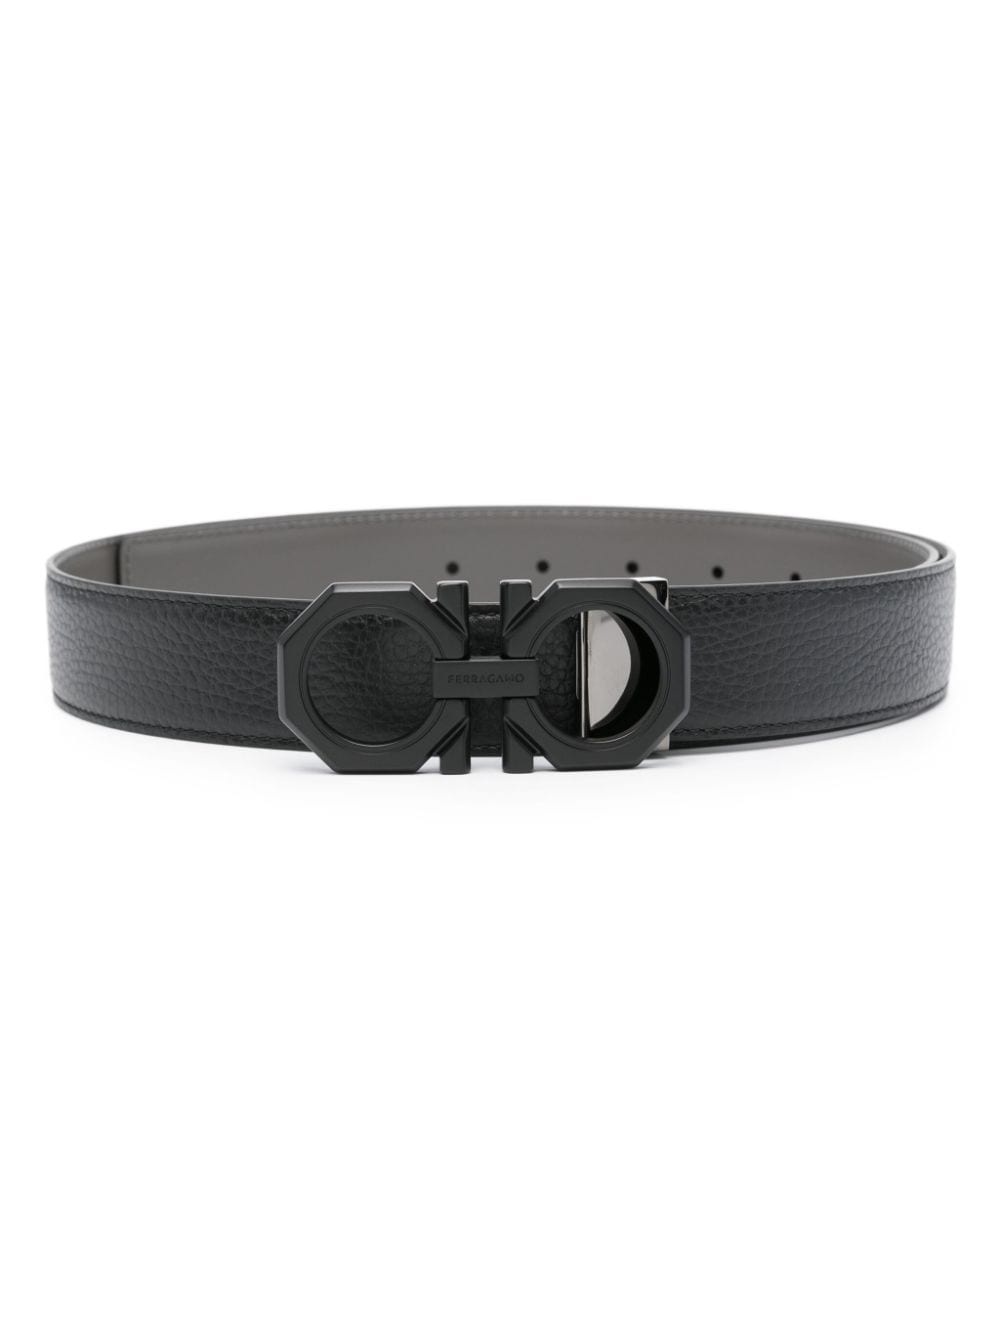 Gancini leather belt - 1